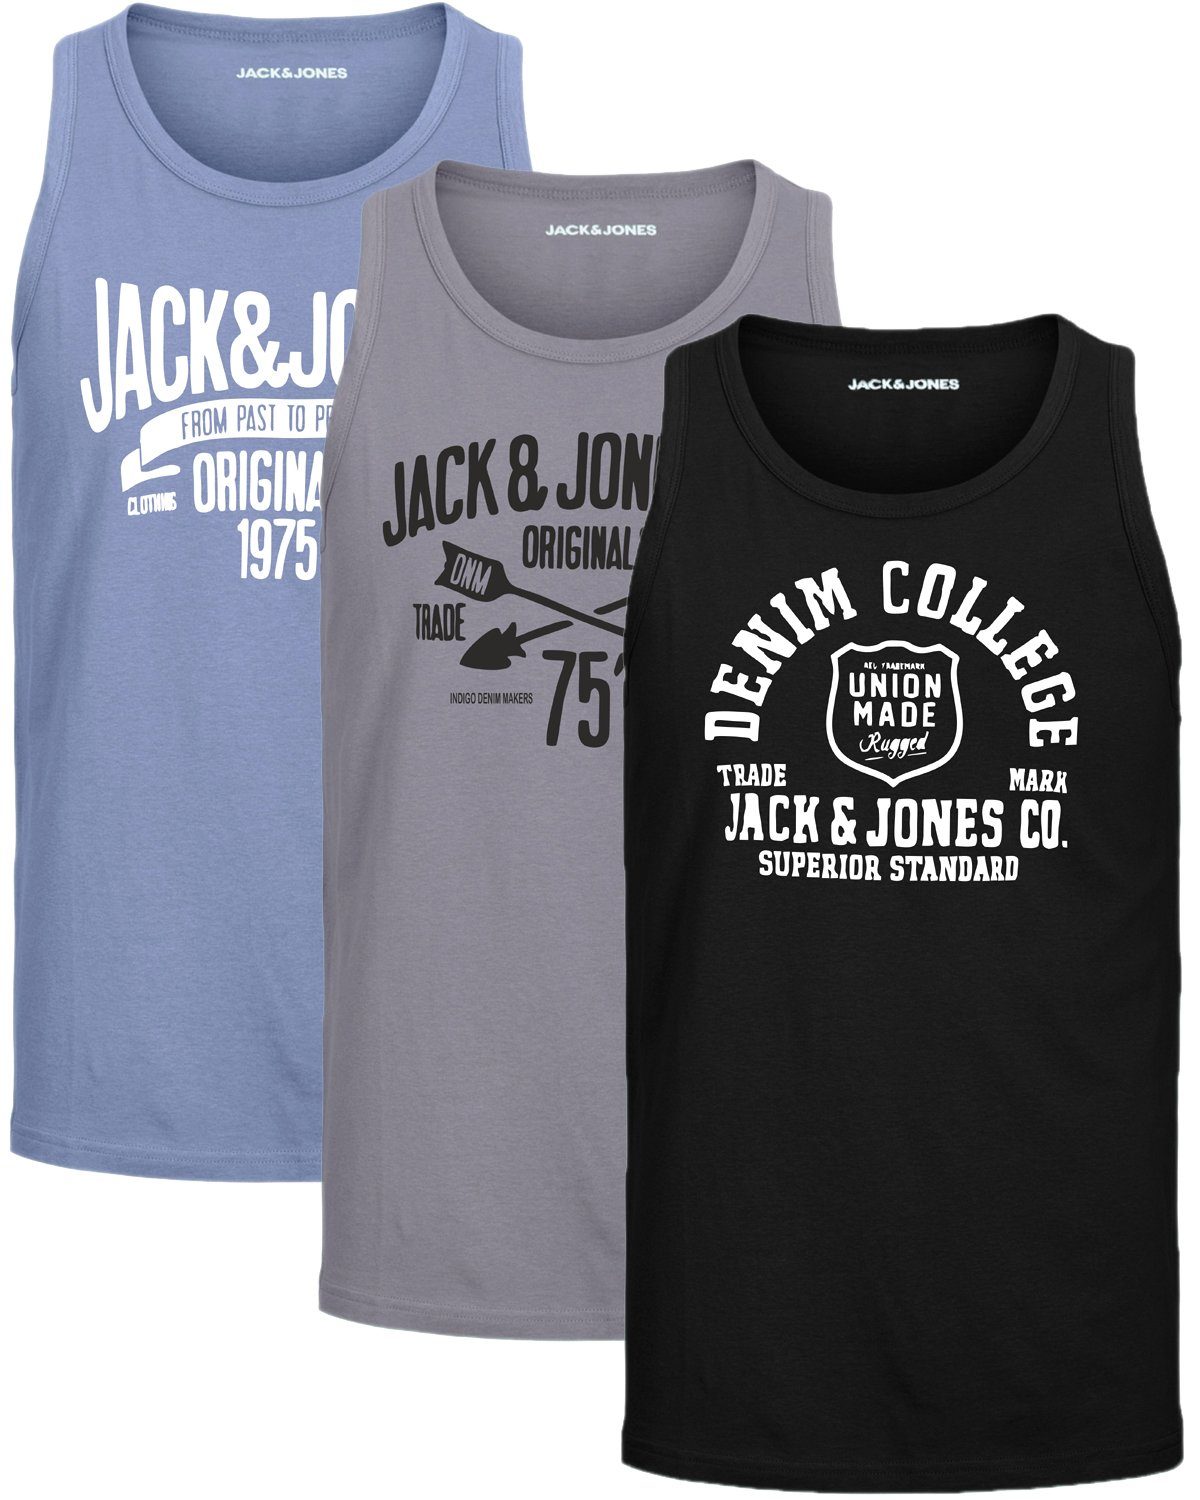 Jack & Jones Tanktop Bequemes Slimfit Shirt mit Printdruck (3er-Pack) unifarbenes Oberteil aus Baumwolle, Размер XXL